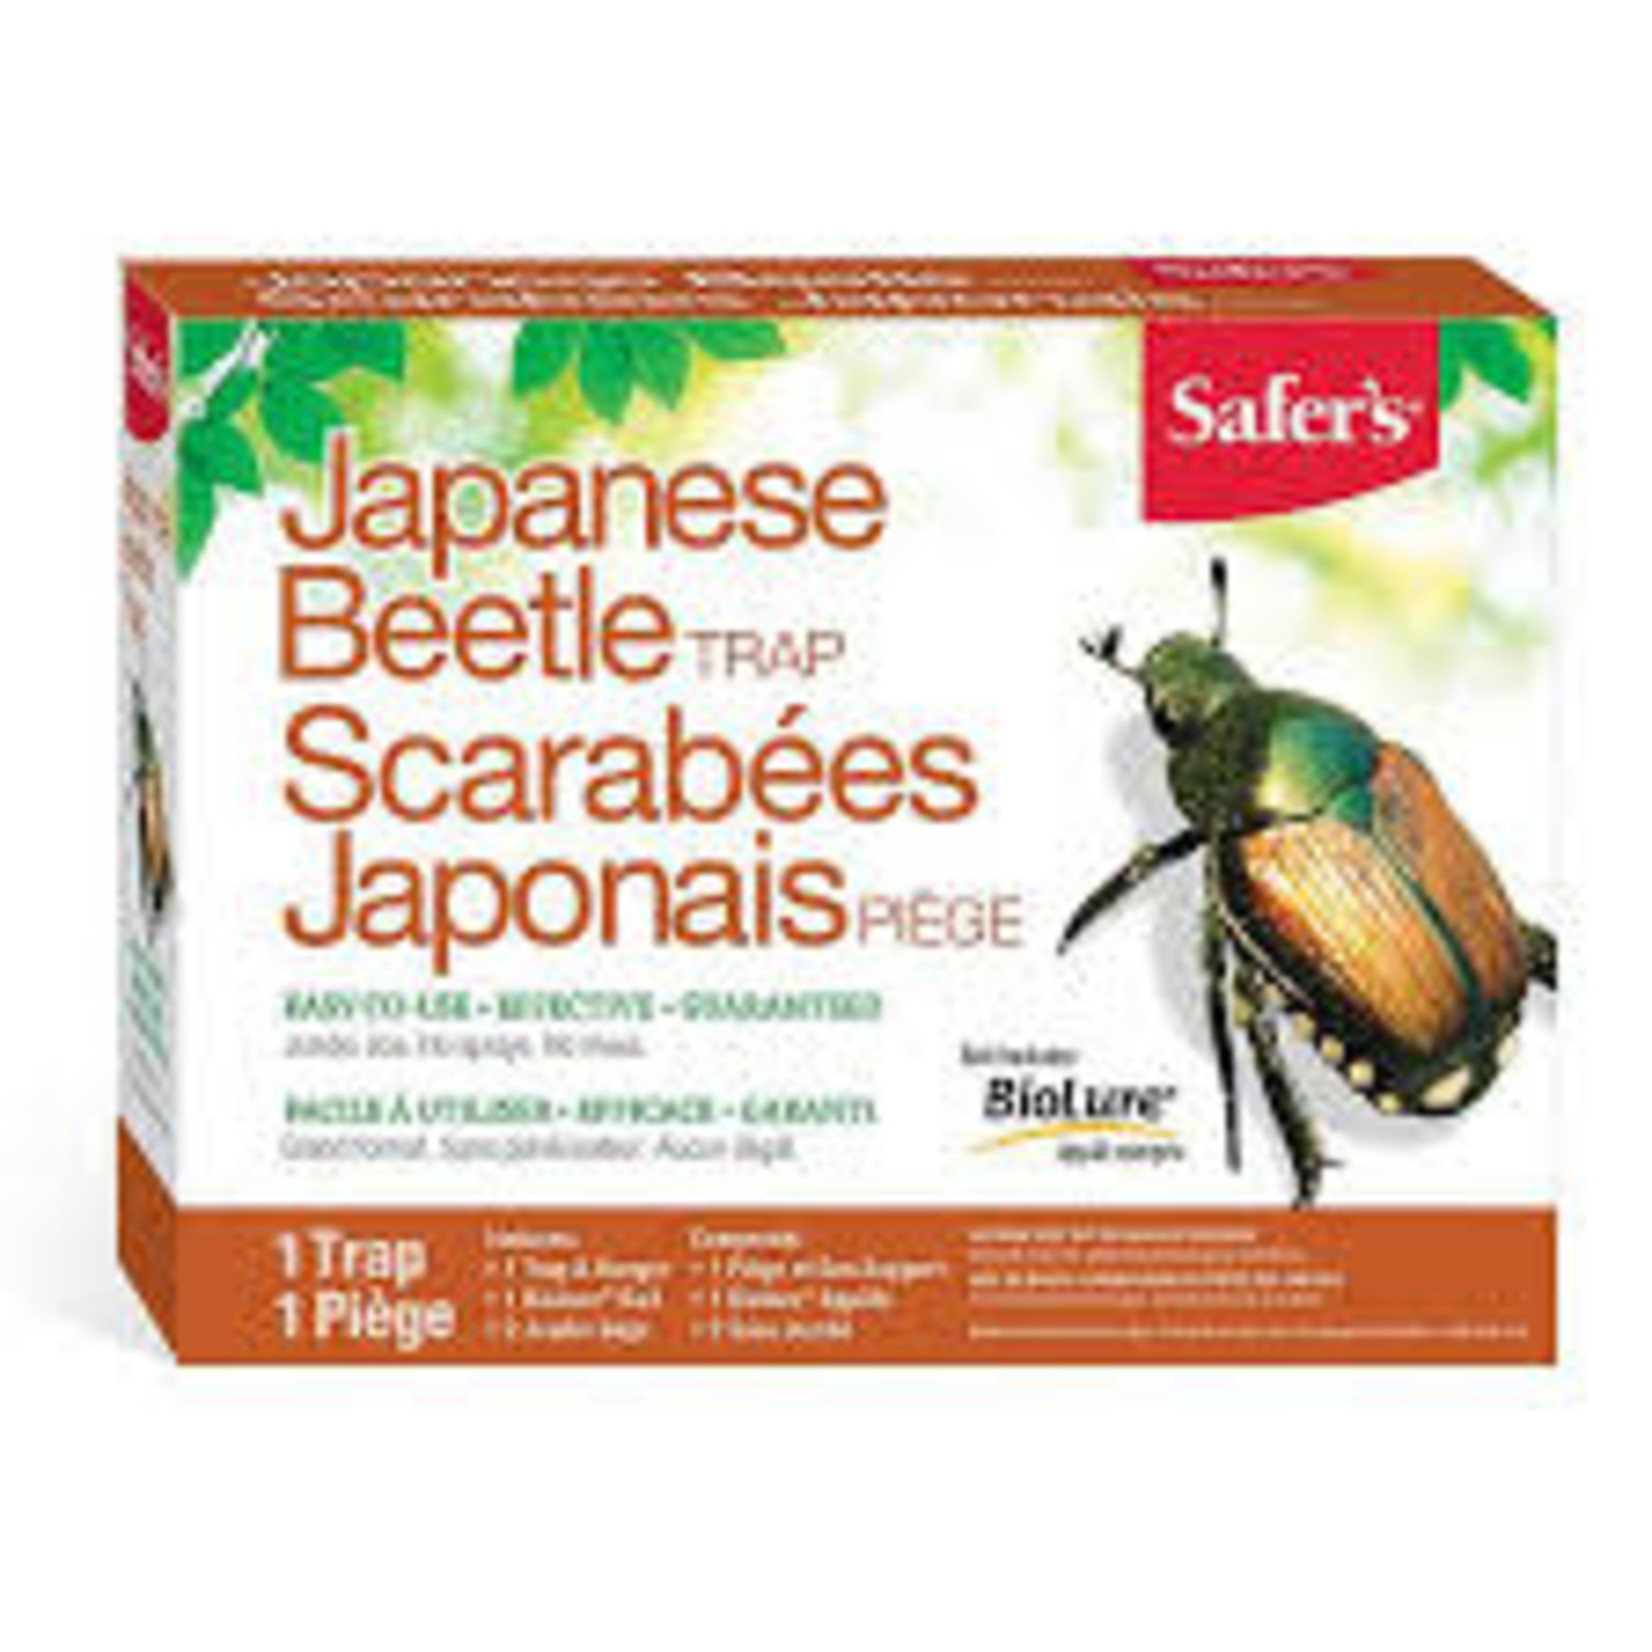 Safers Safer's Japanese Beetle Trap